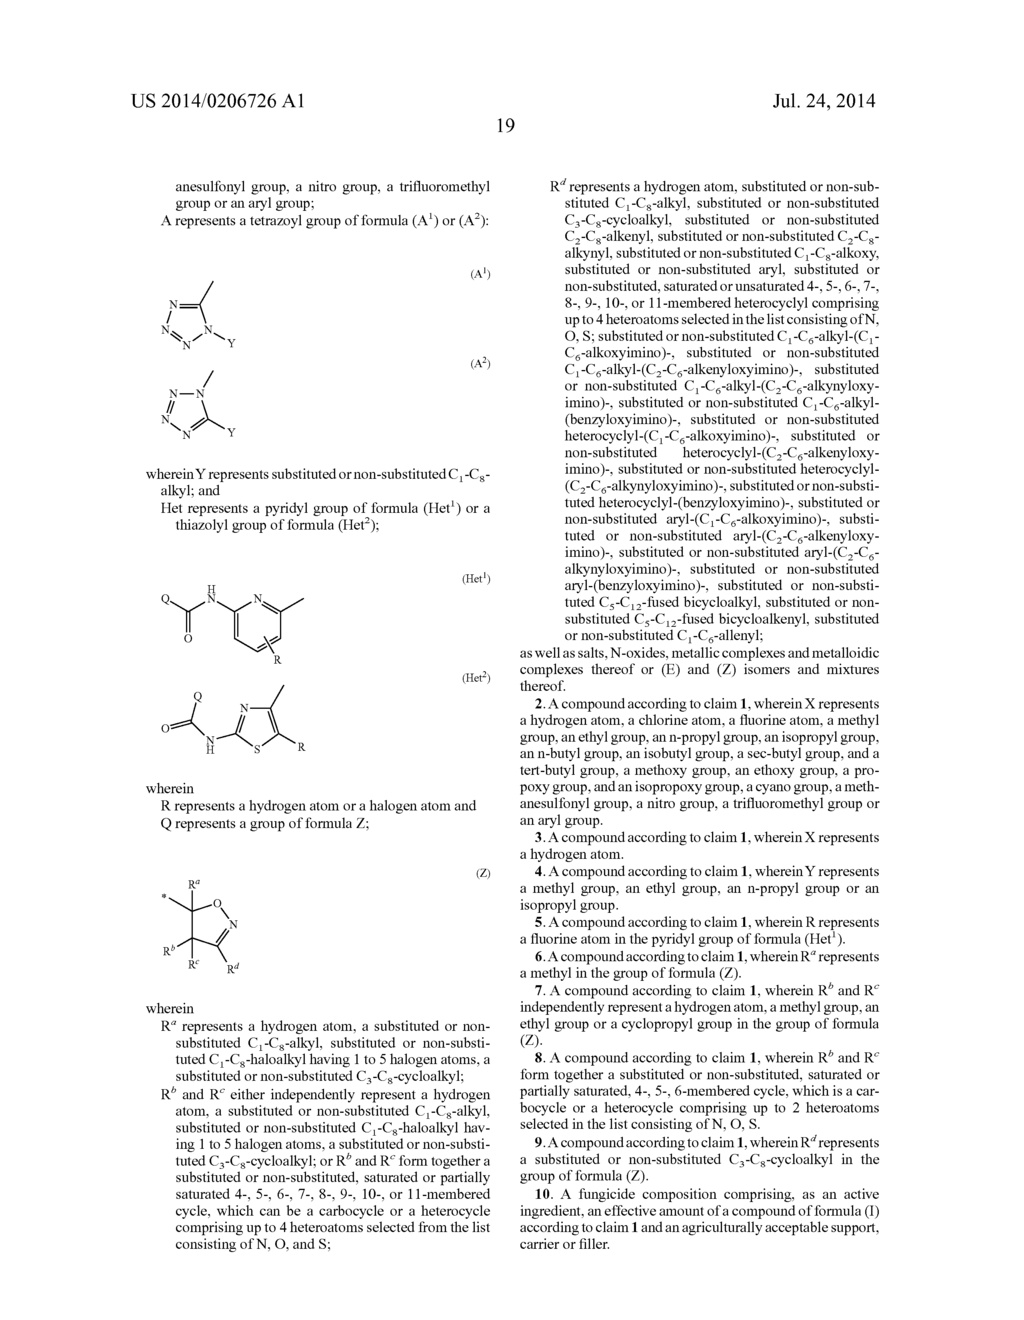 FUNGICIDE HYDROXIMOYL-TETRAZOLE DERIVATIVES - diagram, schematic, and image 20